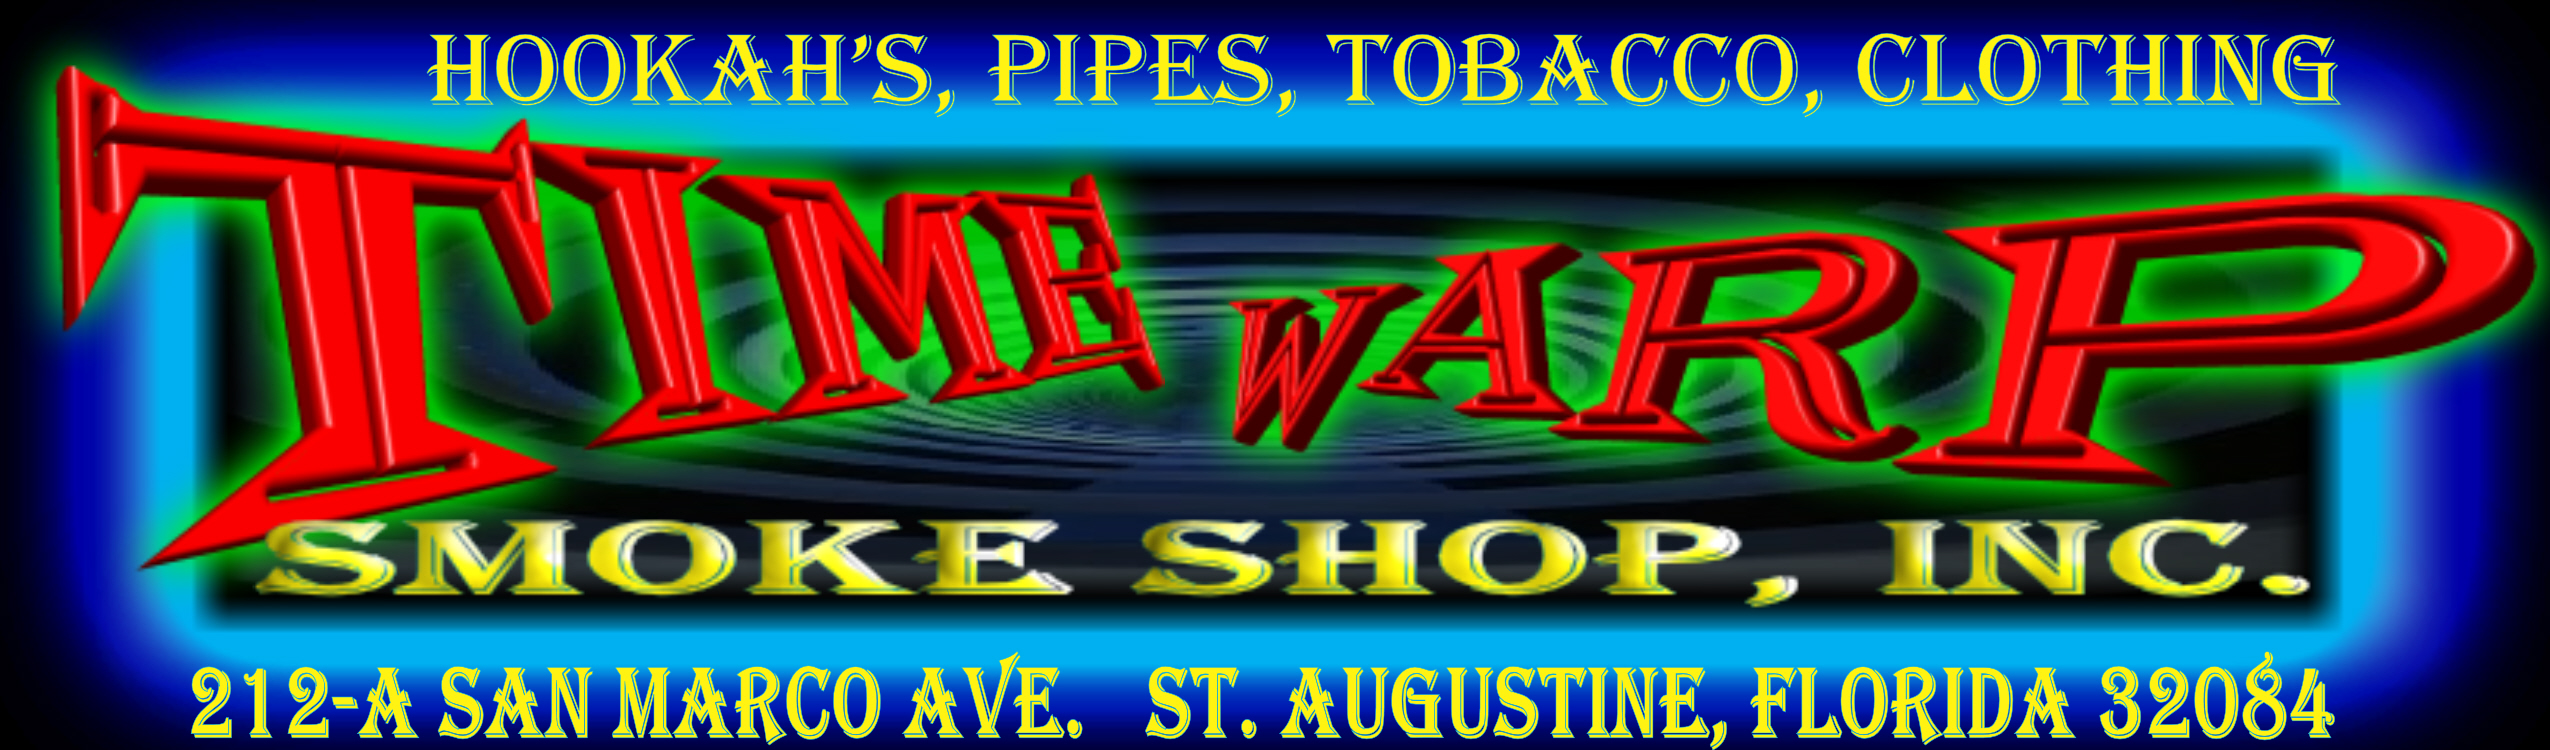 St. Augustine Smoke Shop Banner